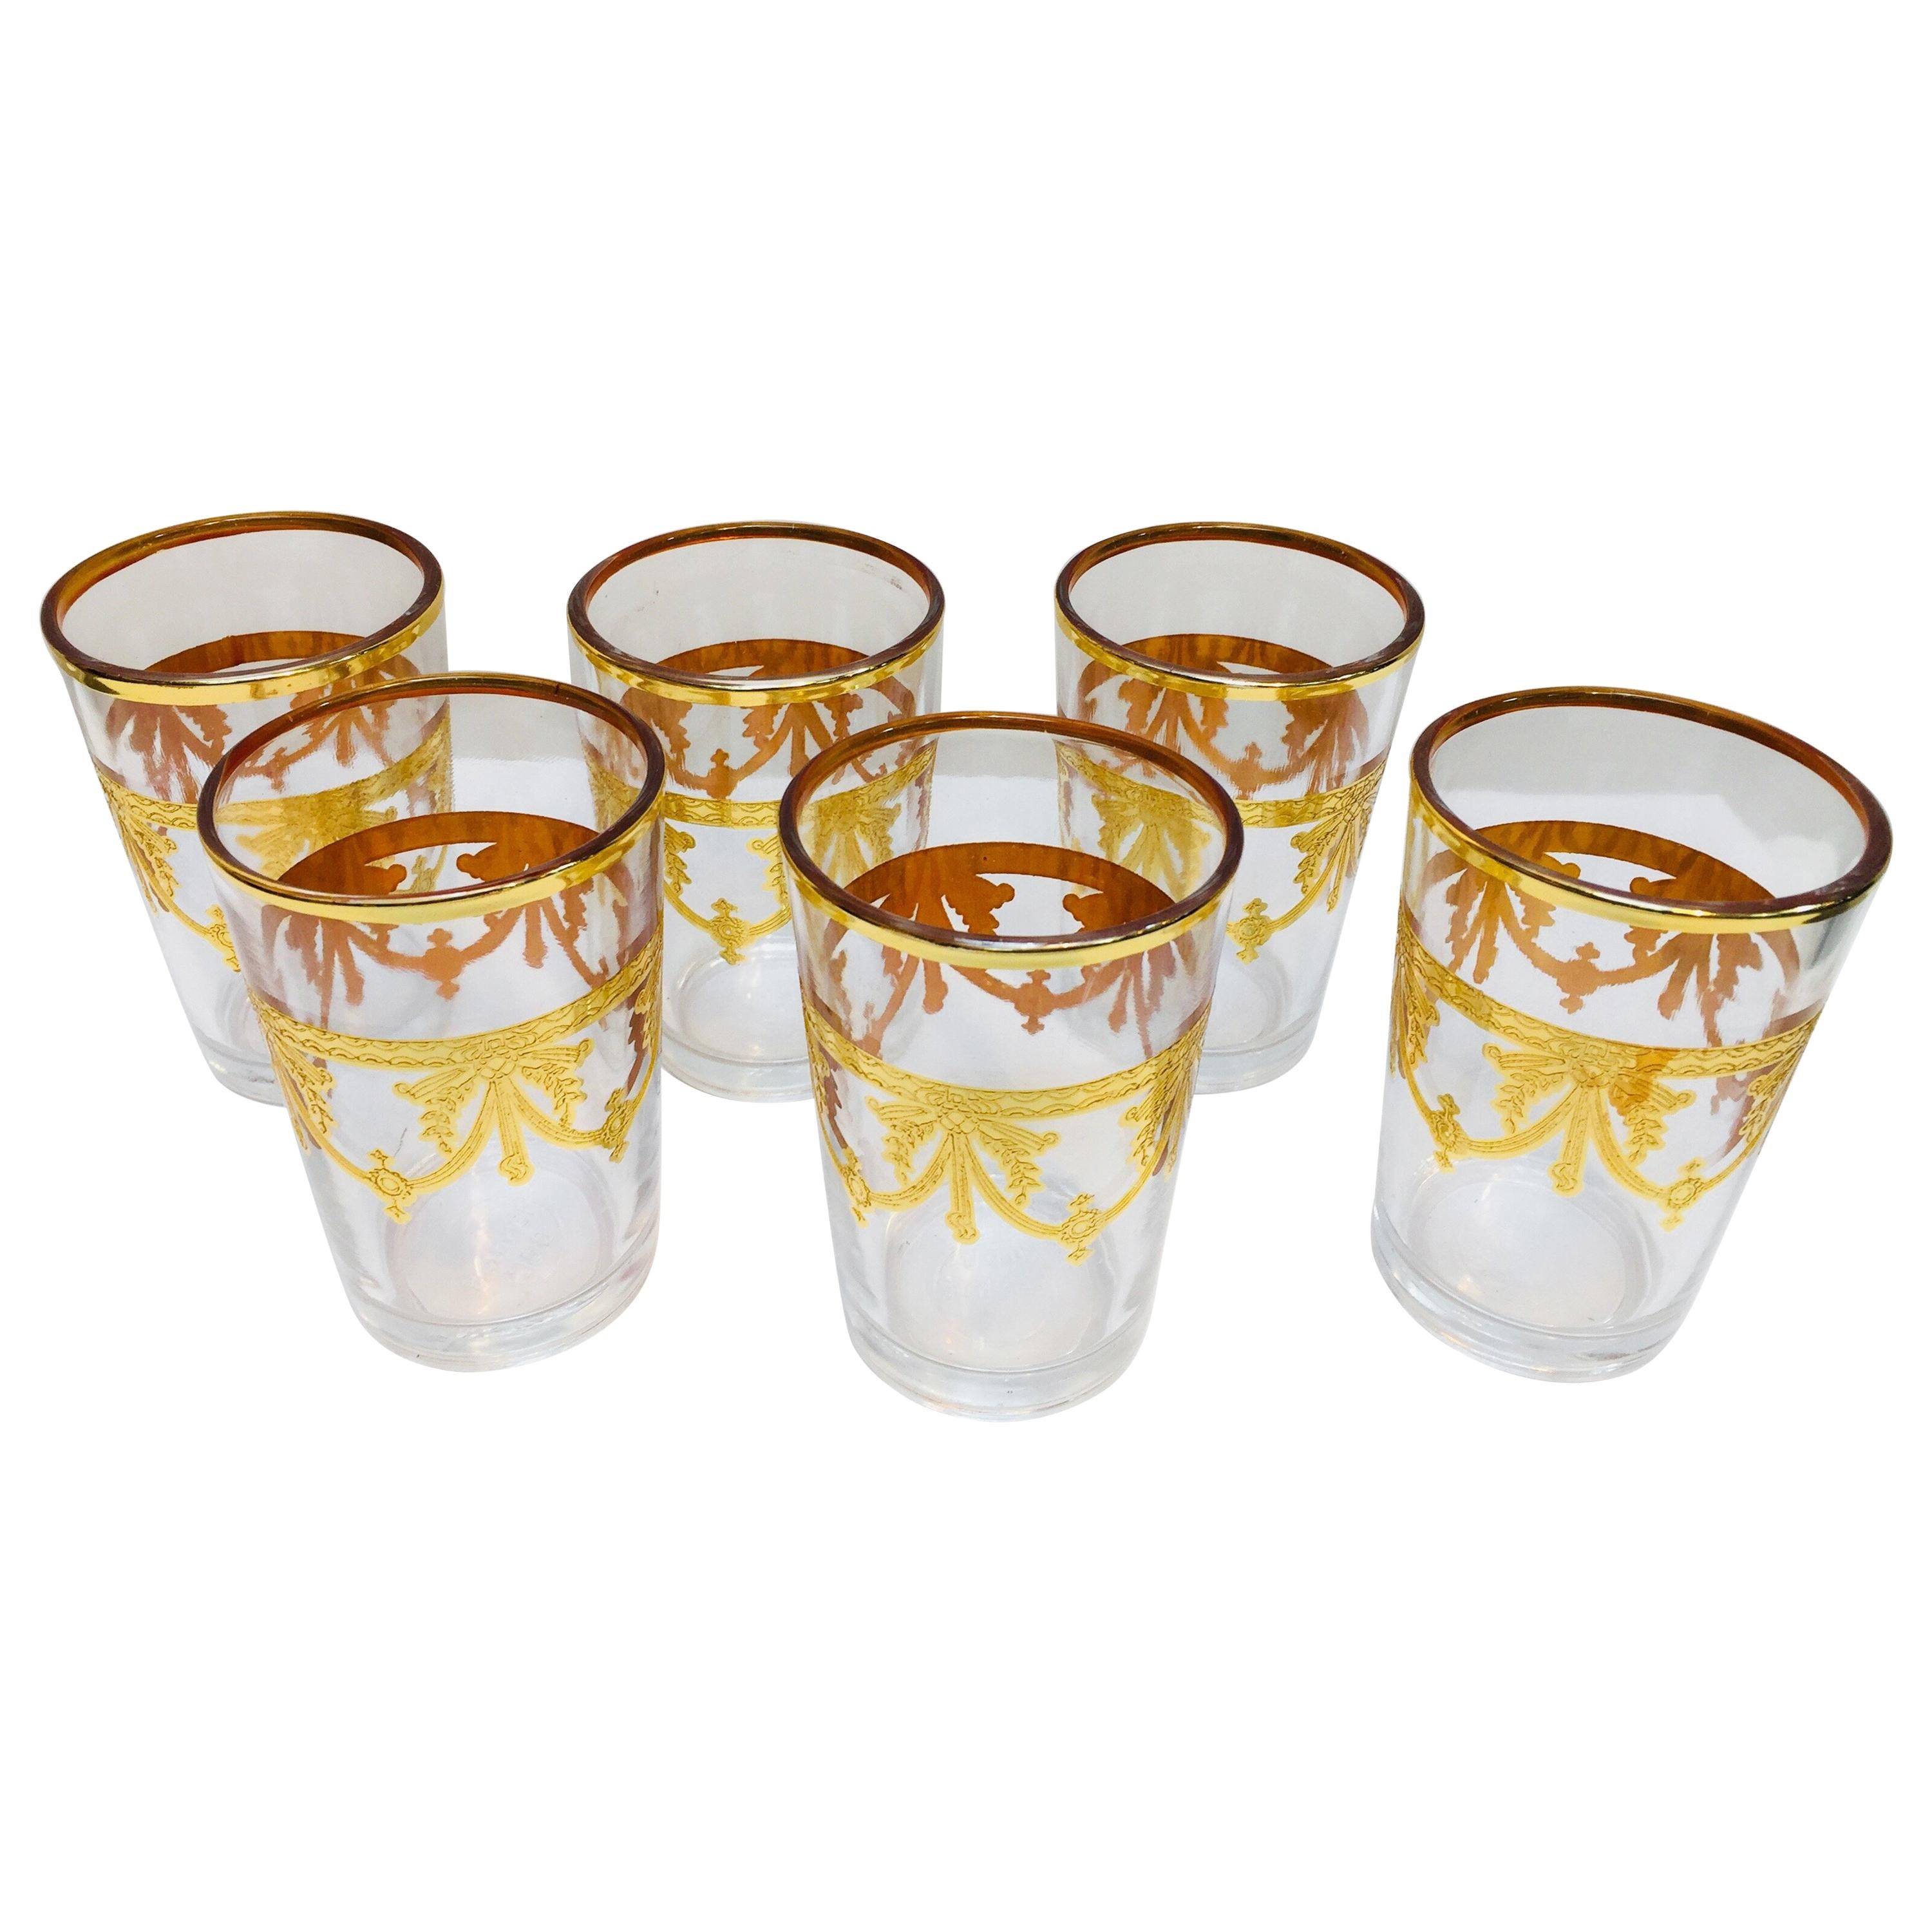 Set of Six Moorish Glasses with Gold Raised Overlay Design